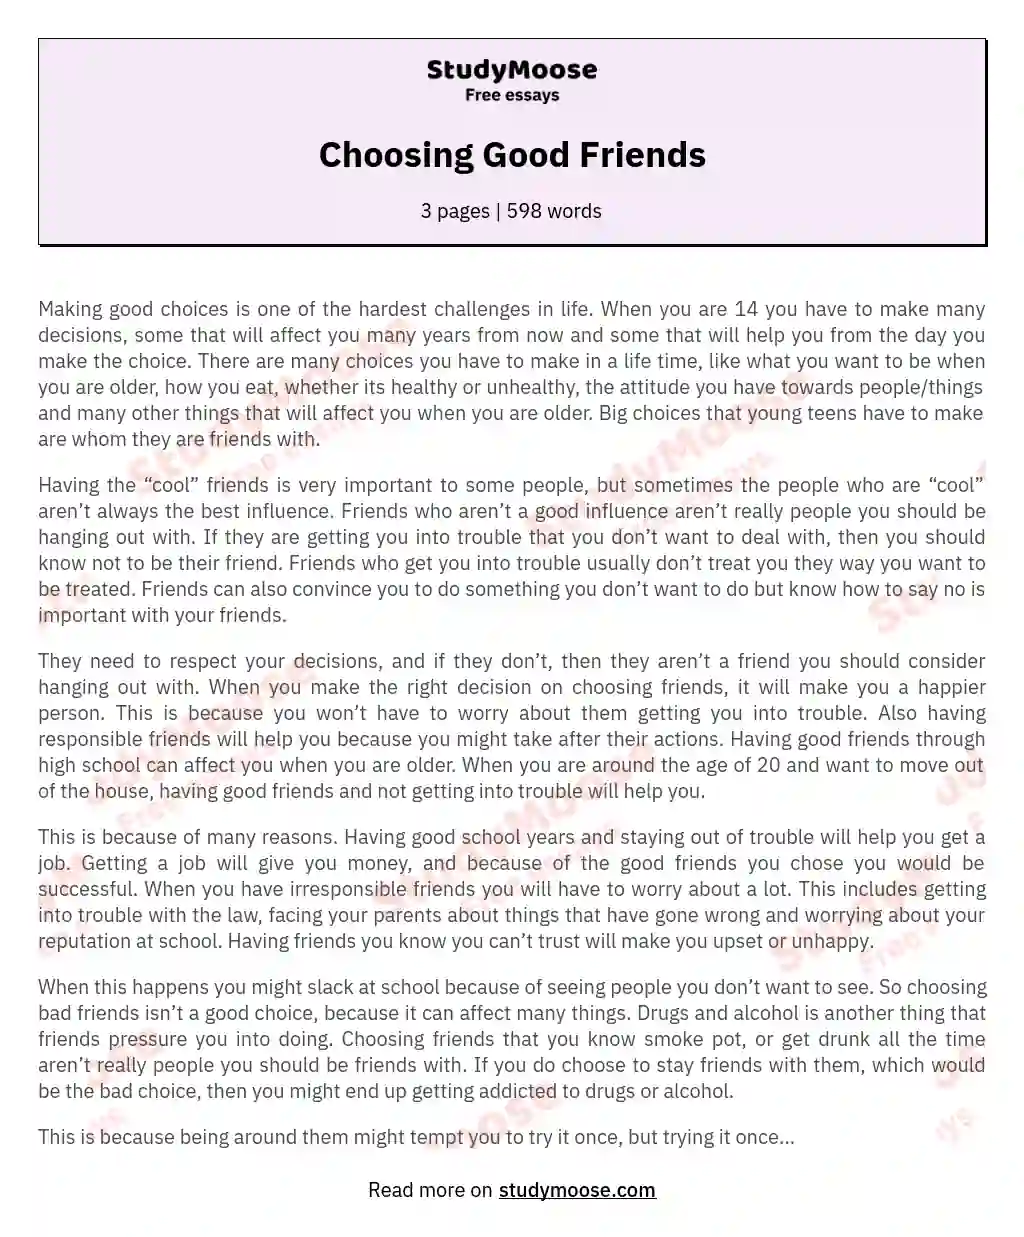 Choosing Good Friends essay